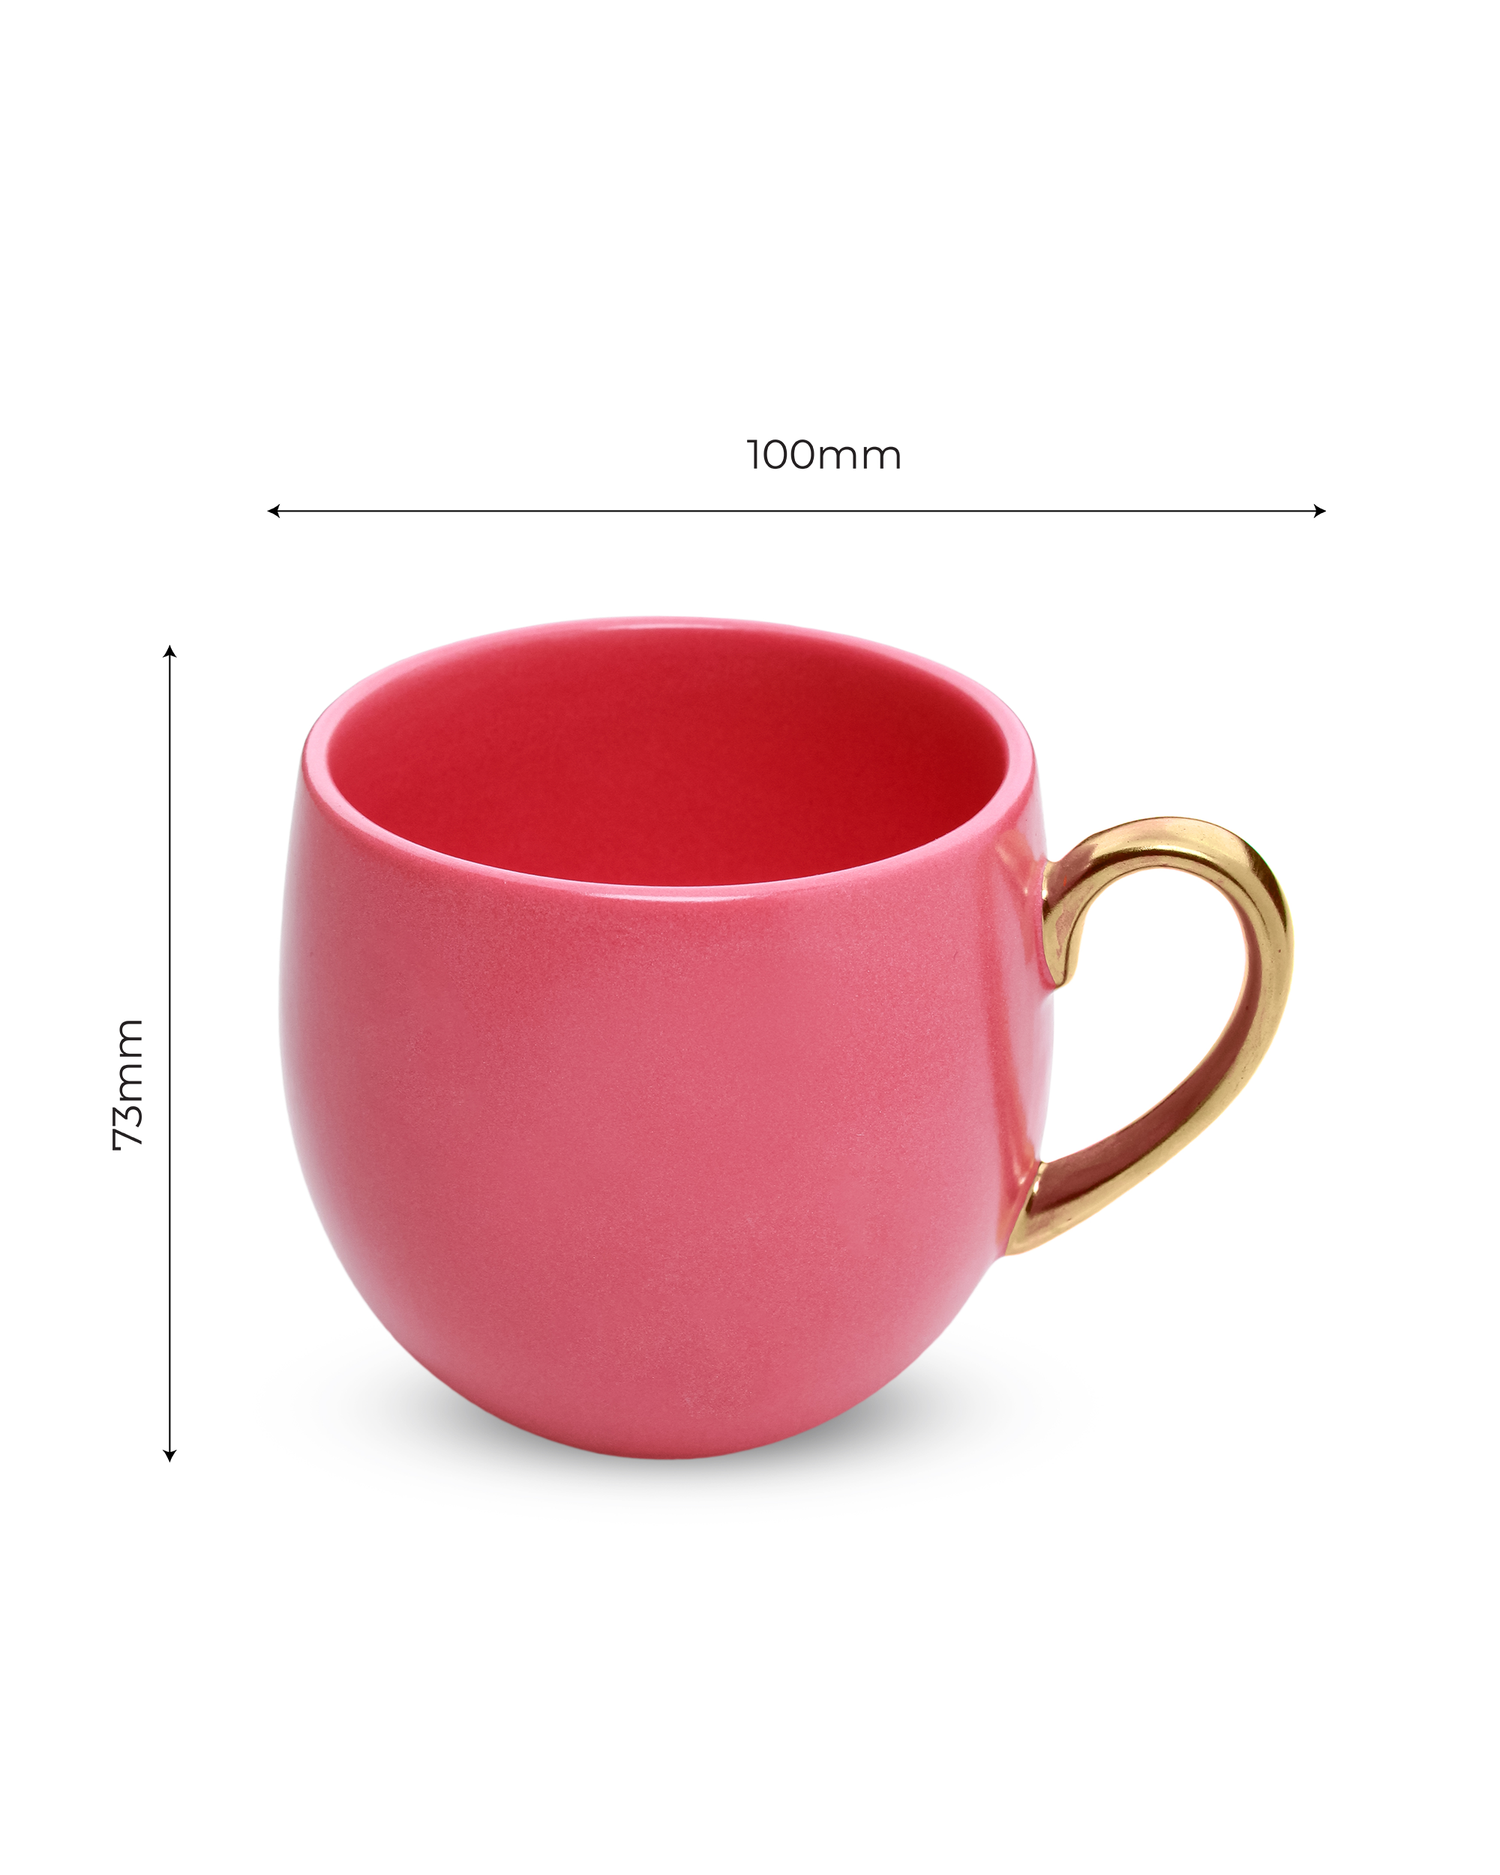 STRAWBERRY ICE / Set of 2 * 220ml || Bloom luxurious Tea Mug | Golden handle